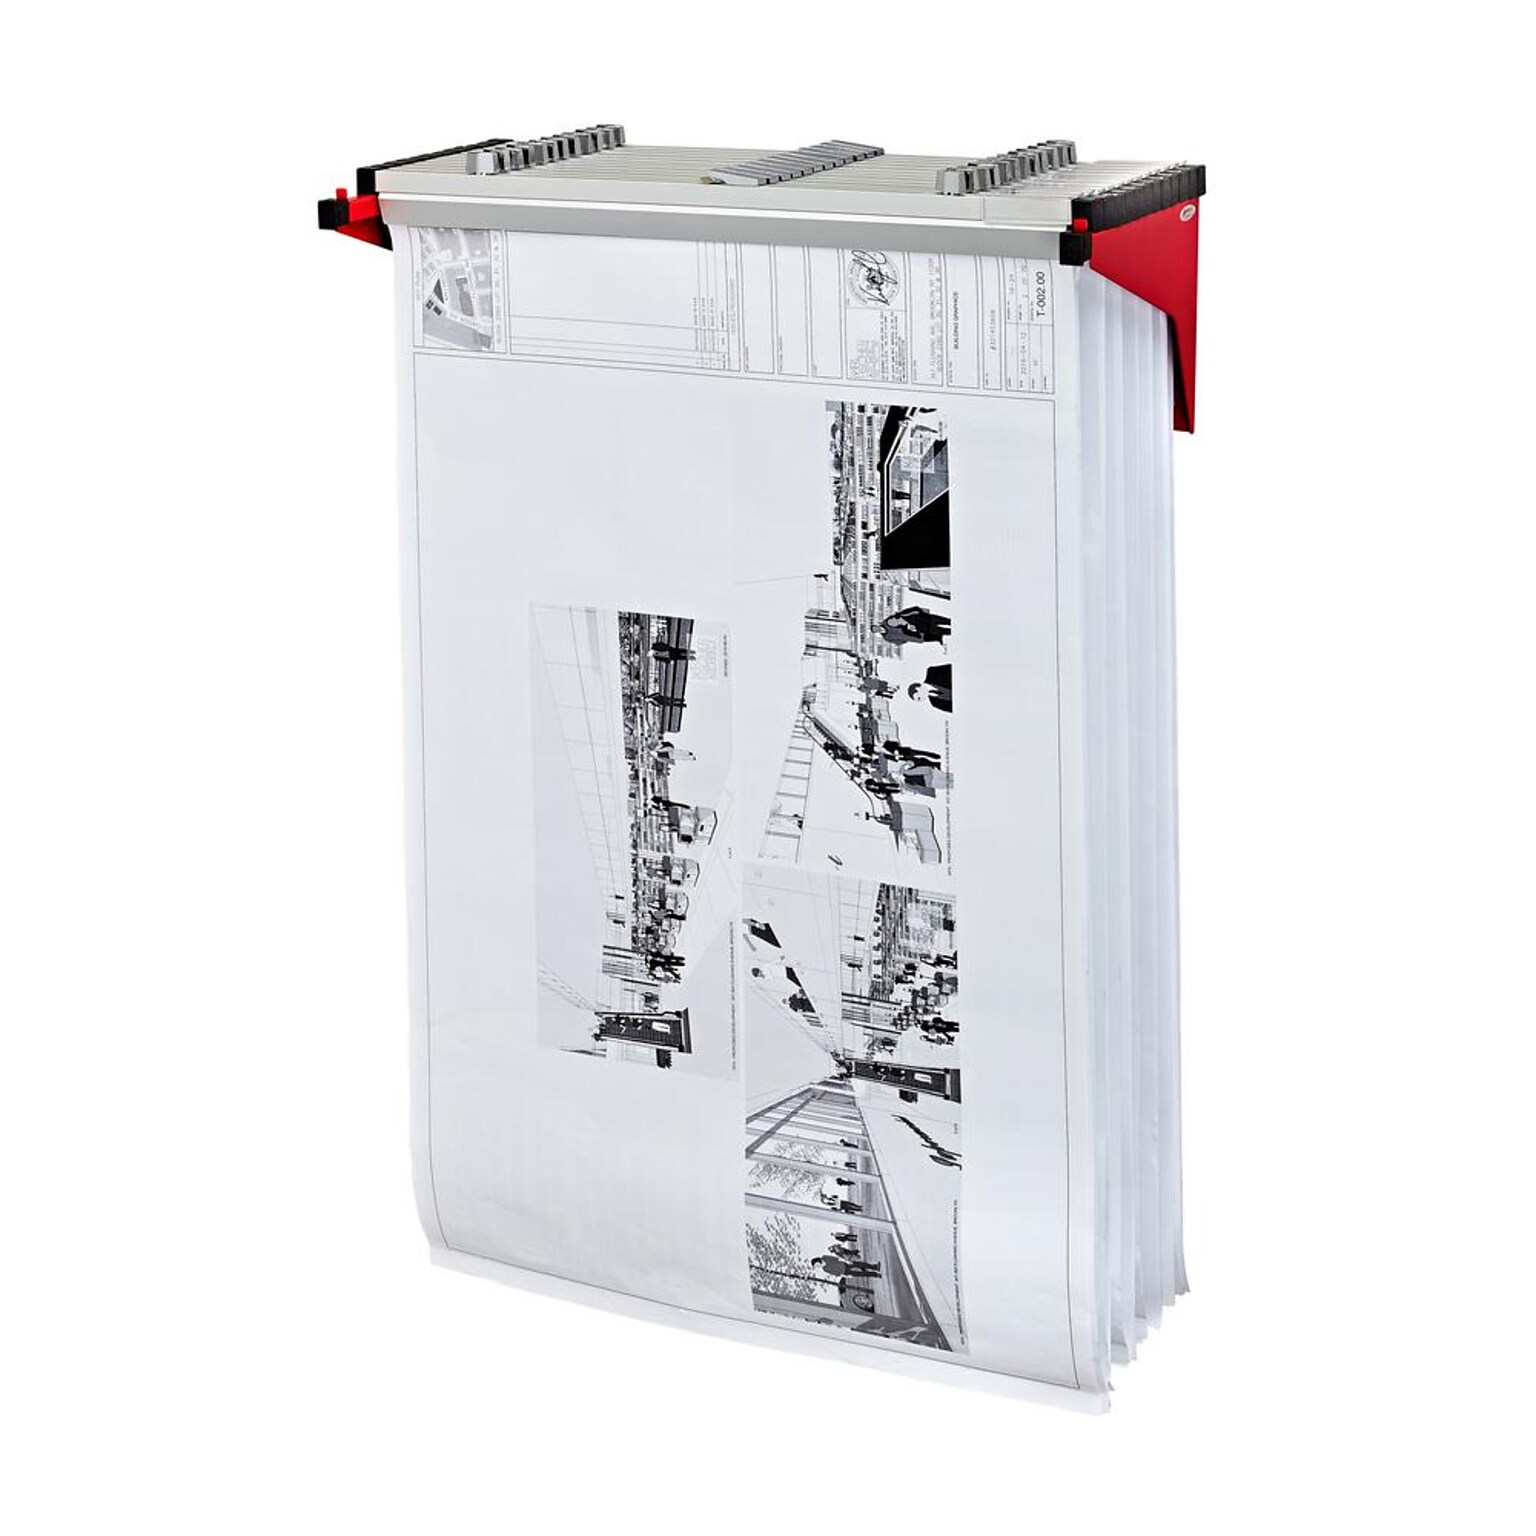 AdirOffice 8 Steel Drop Lift Blueprint Storage Wall Rack, Red (616-RED)